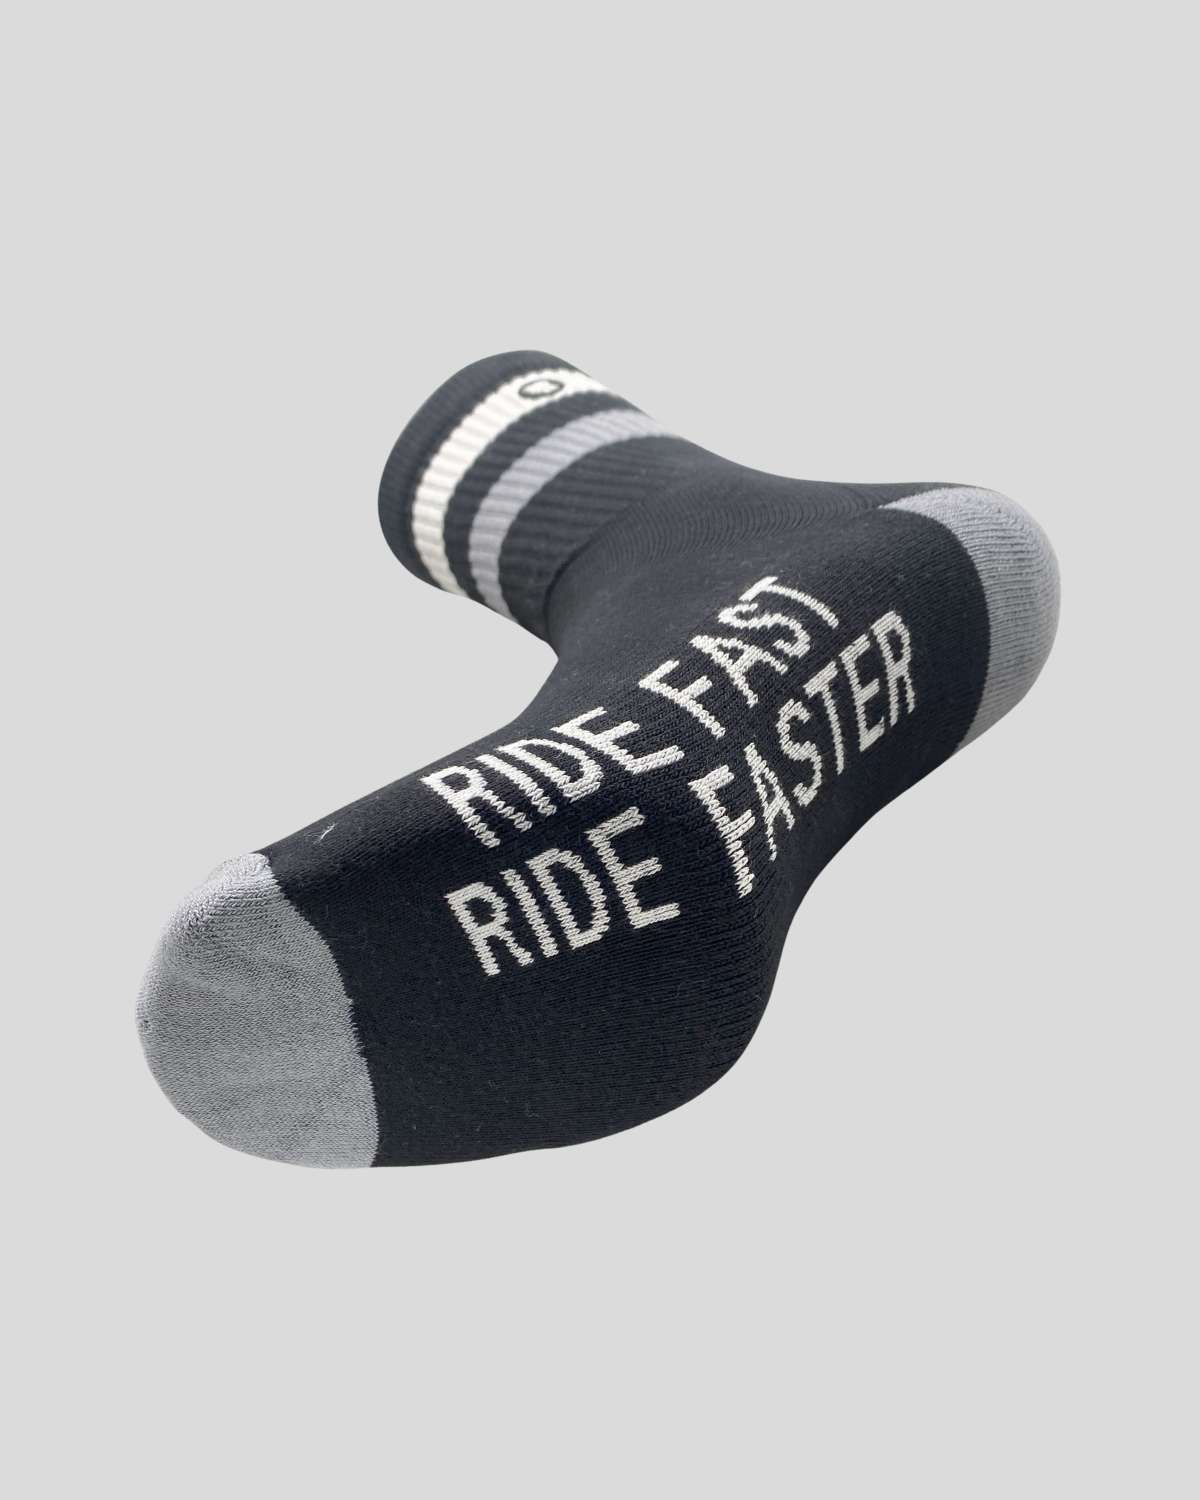 Ride Fast Socks Black/Grey